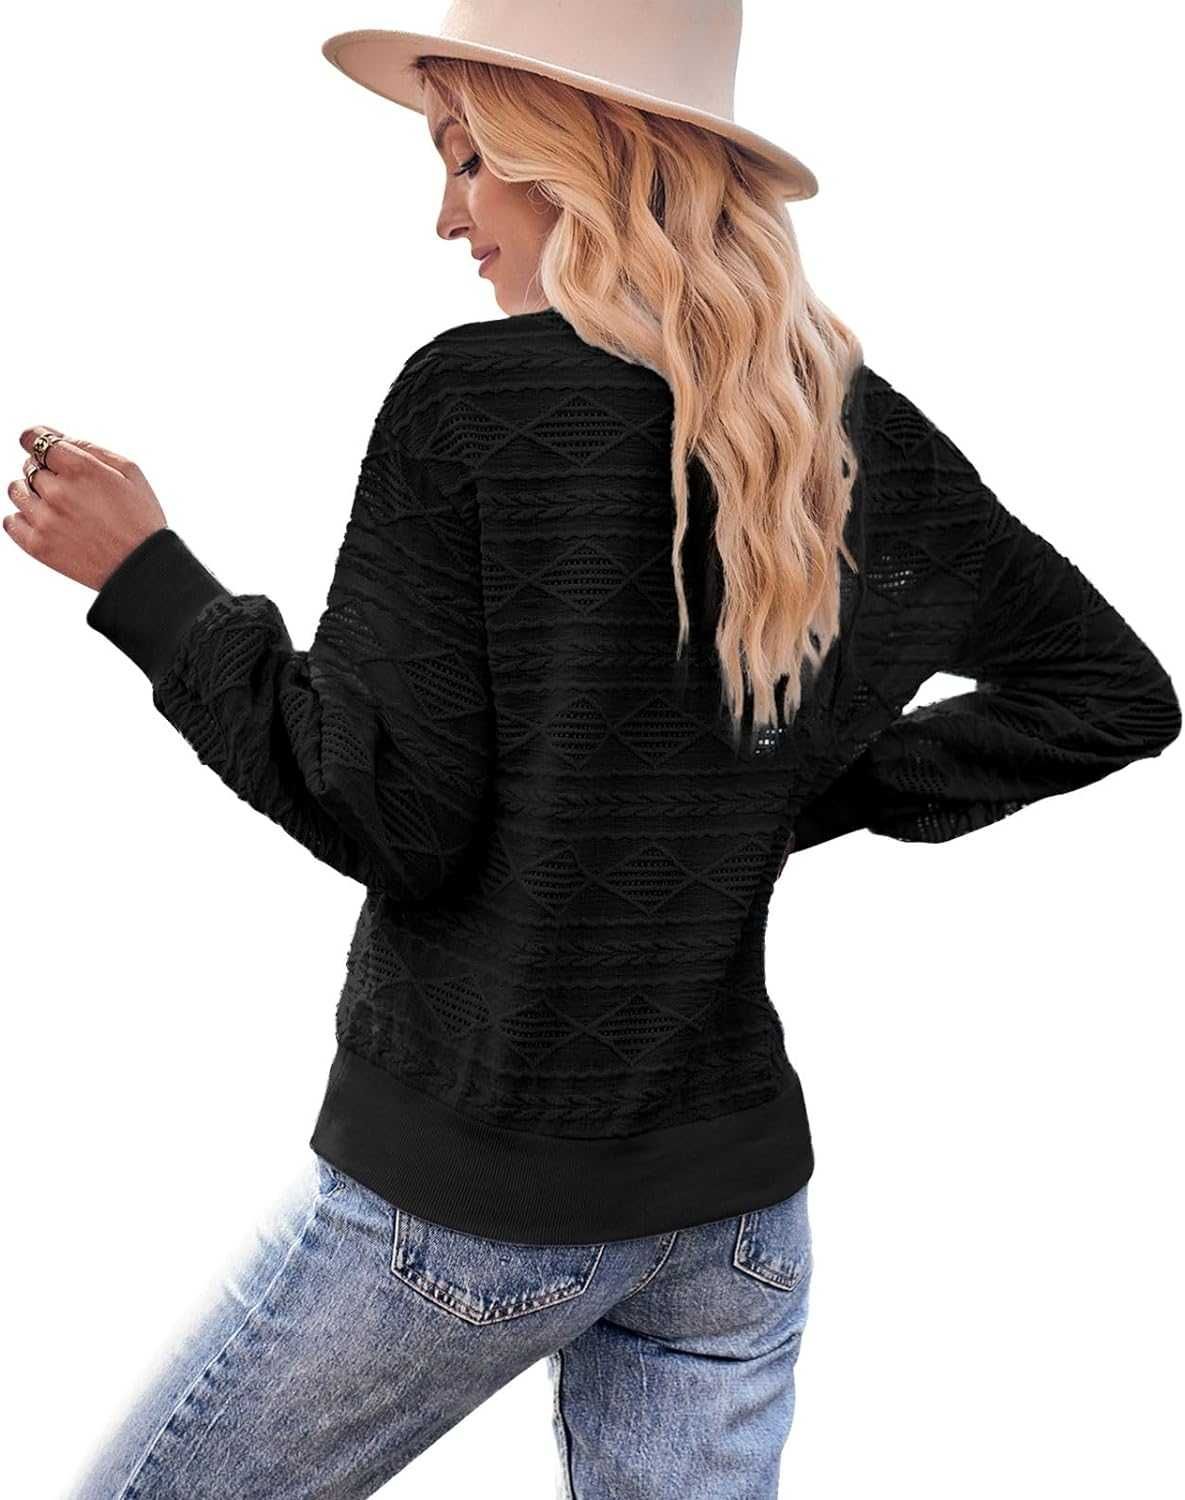 Nowa bluzka / bluza / sweter / top / pulower / czarna / XL !2231!